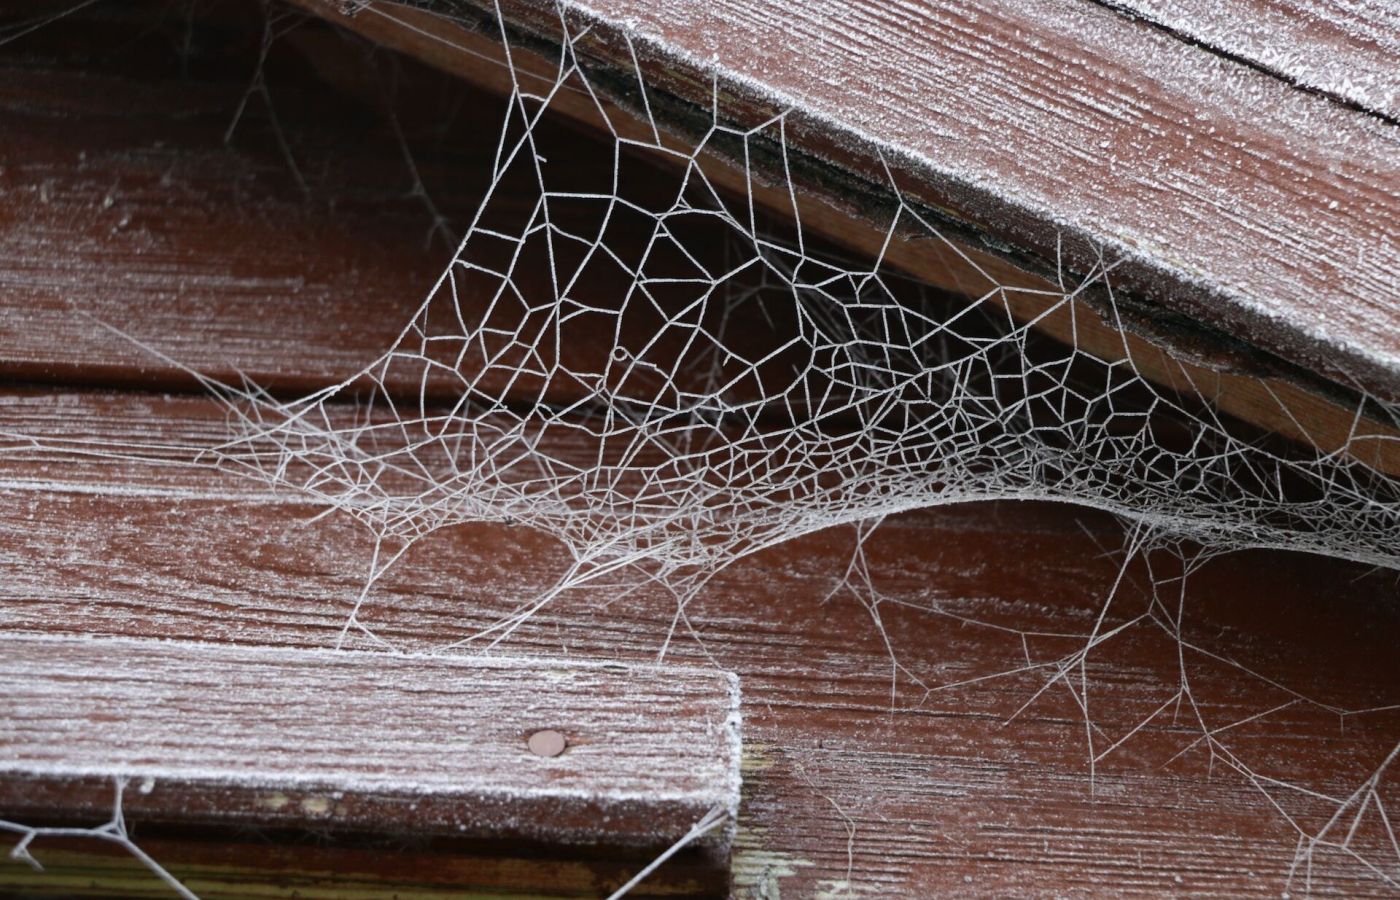 Spider pest control - spider bites, spider webs